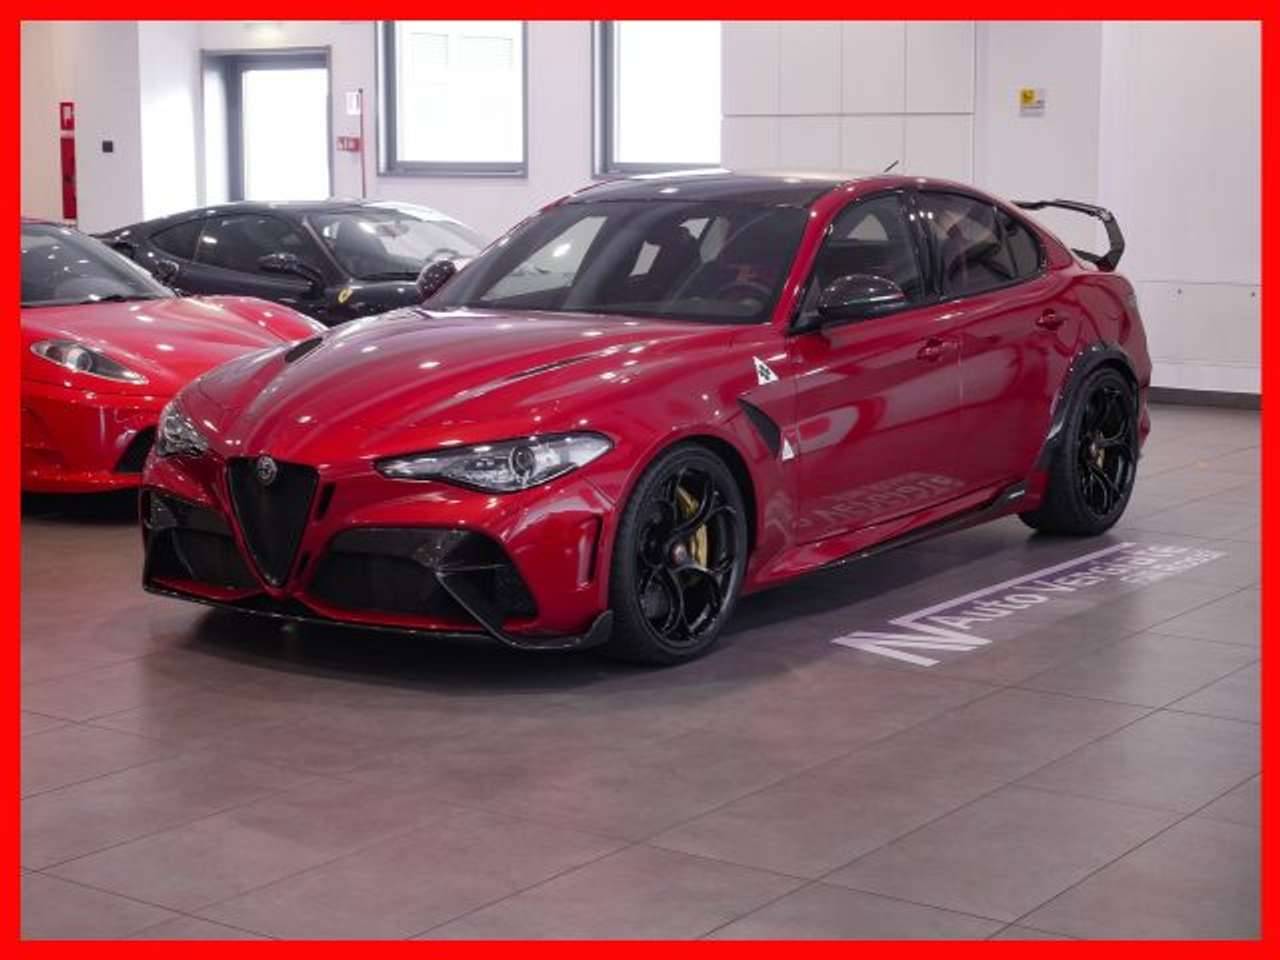 Te koop: Alfa Romeo Giulia GTAm (2022) aangeboden € 250.000